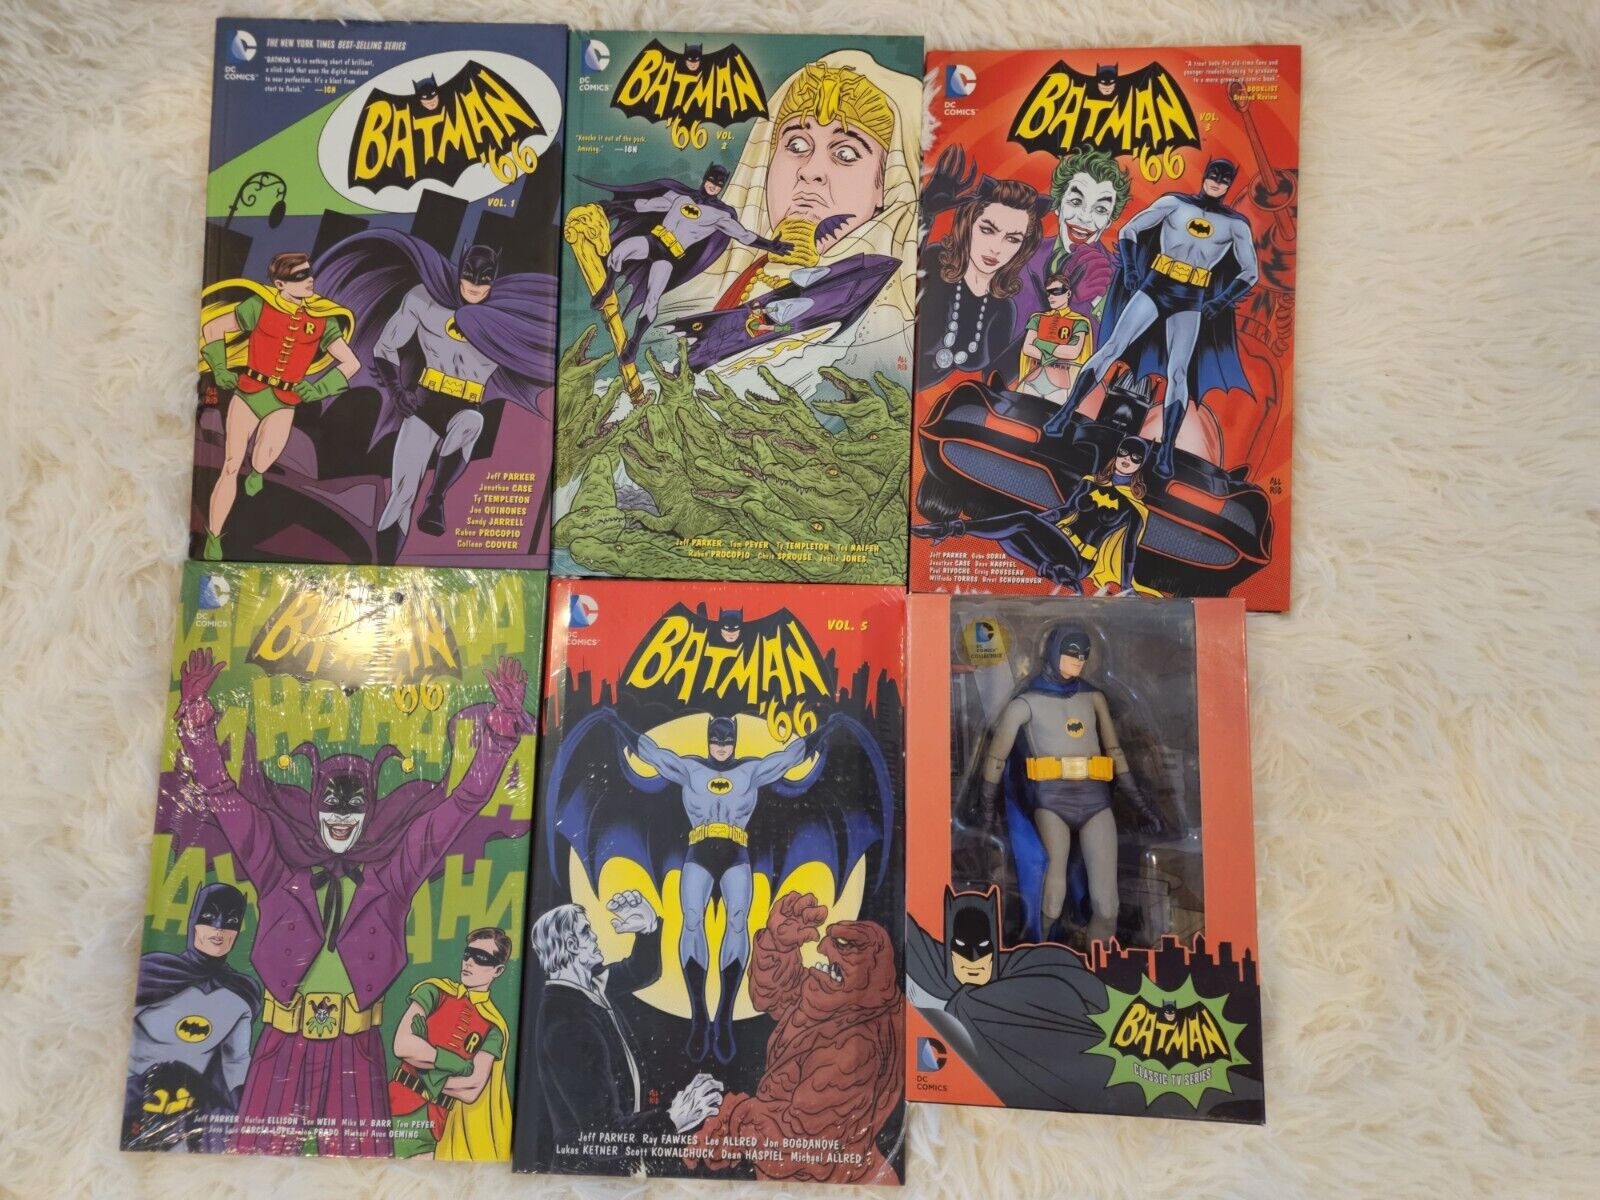 Batman 66 Hardcover Vol. 1-5 Plus NECA Adam West Batman Figure